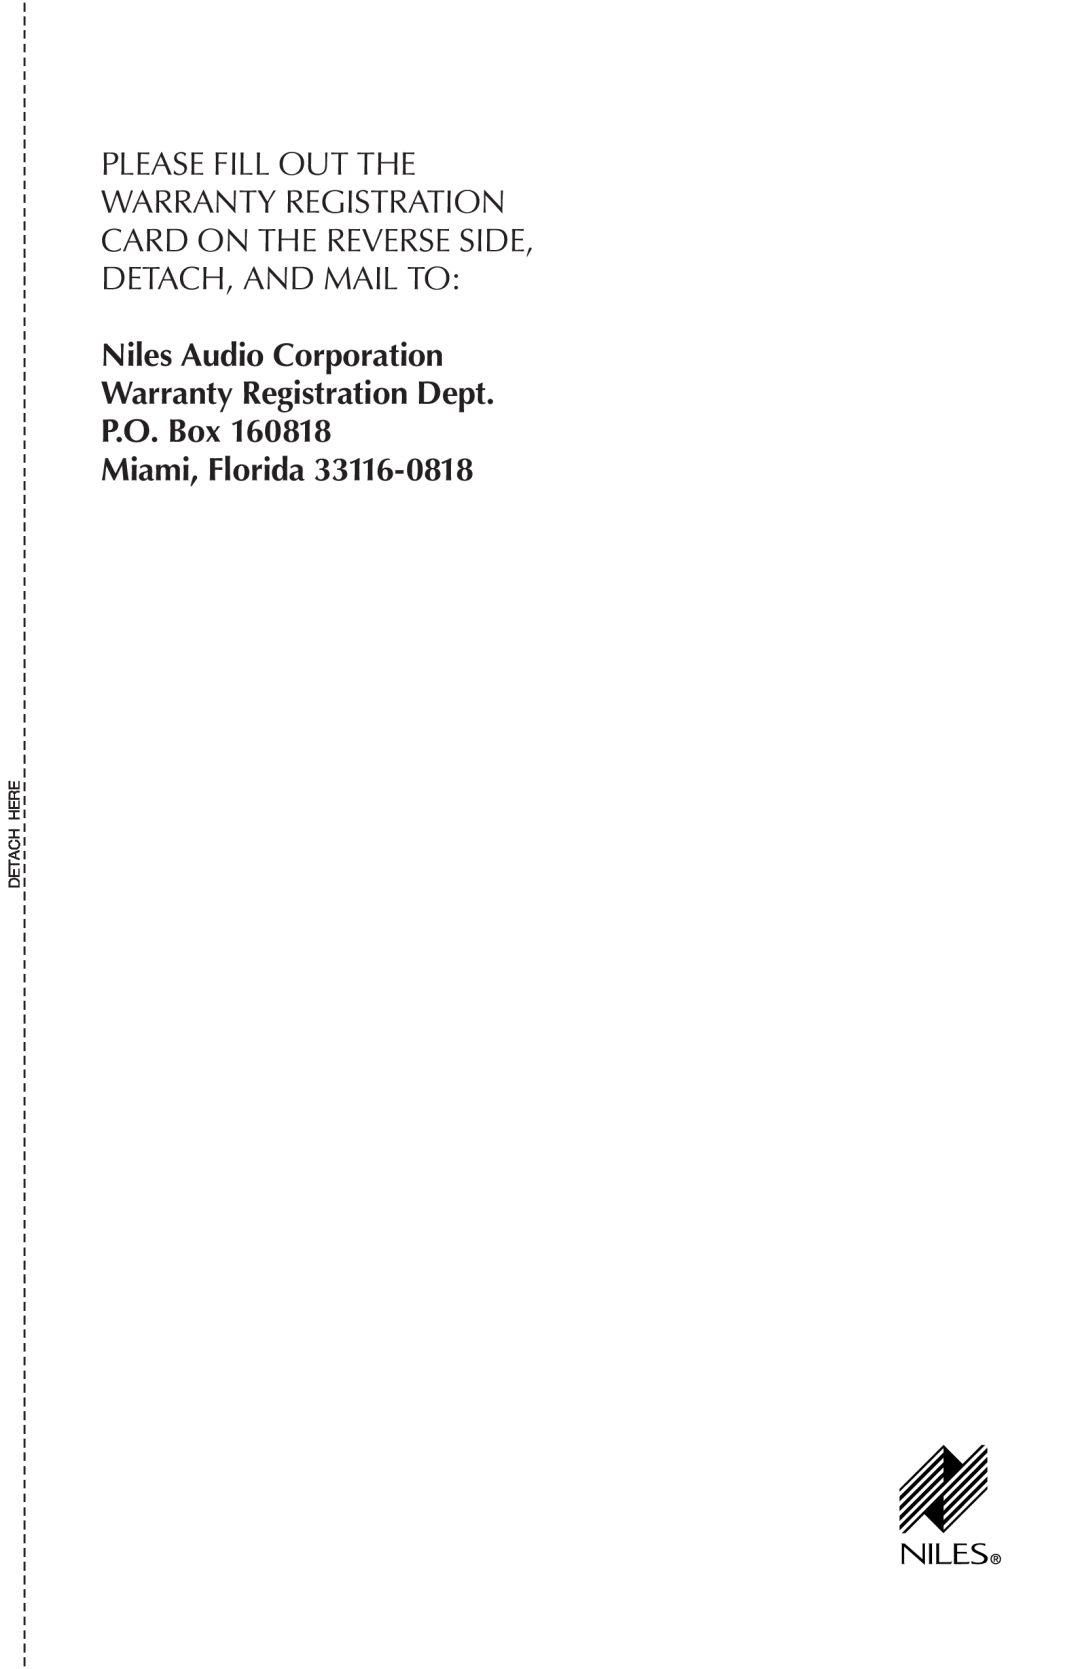 Niles Audio SANDSTONE RS8SI Niles Audio Corporation, Warranty Registration Dept P.O. Box, Miami, Florida, Detach Here 